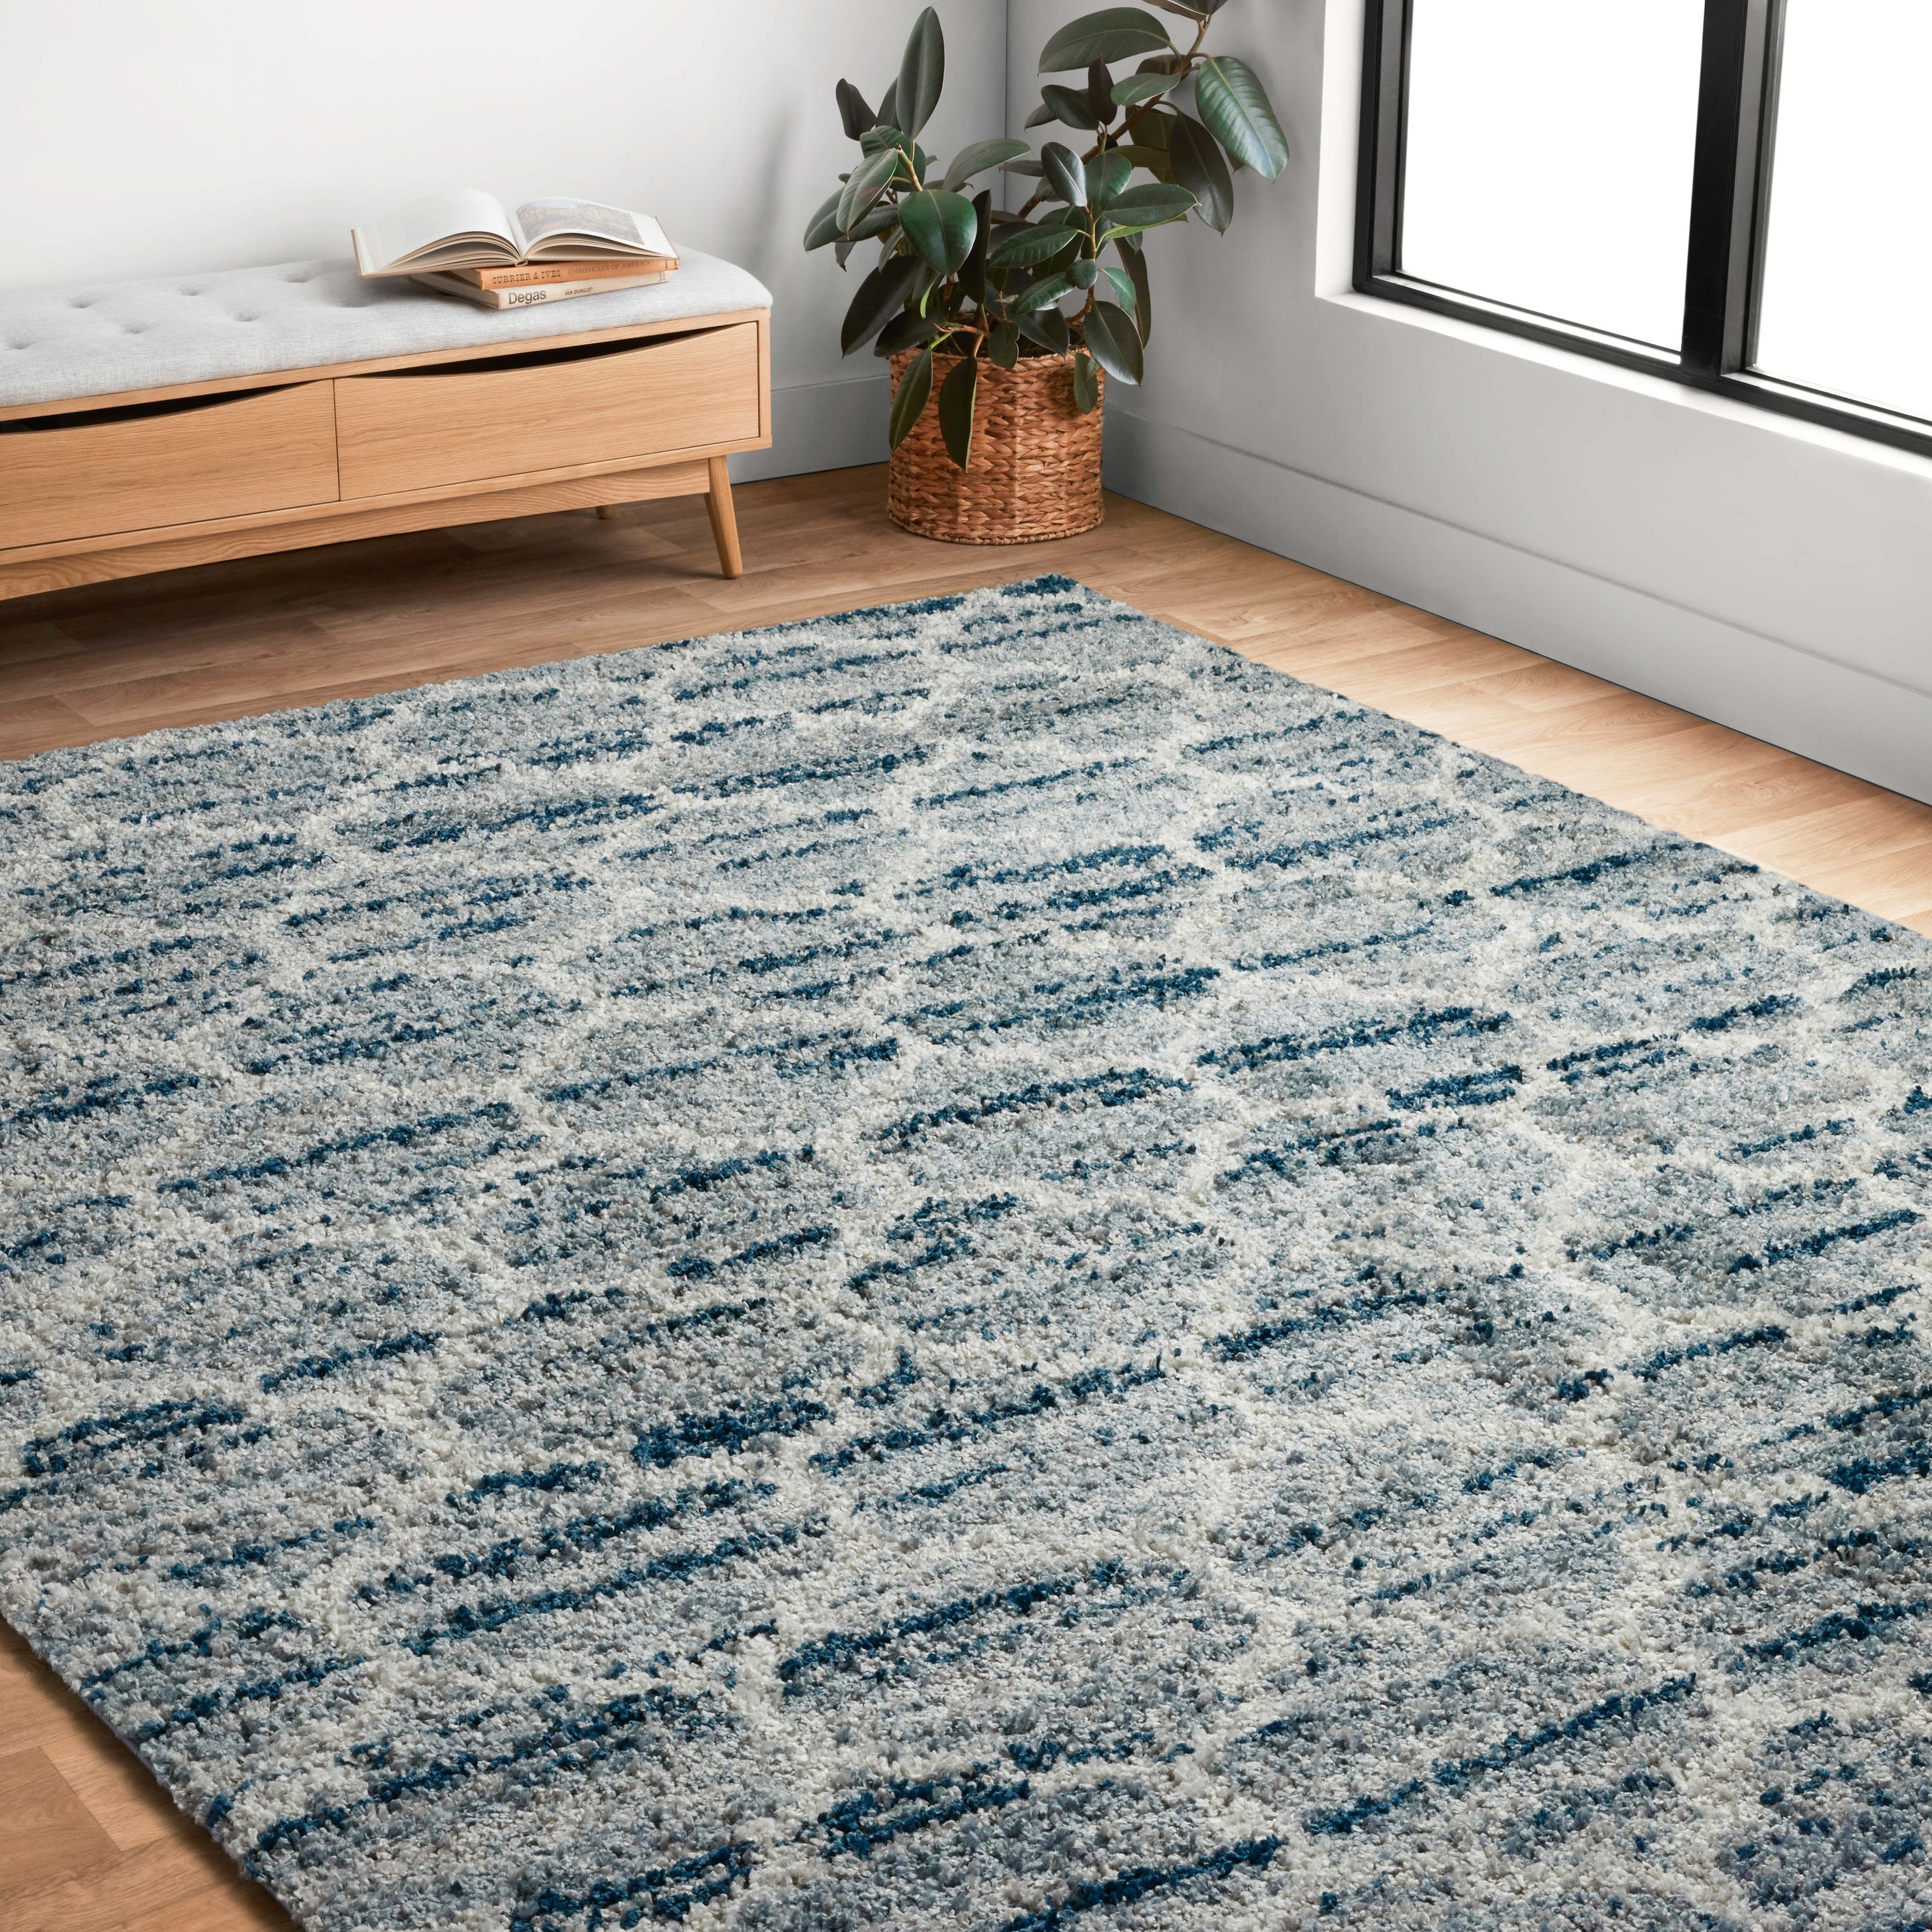 Modern Royal Blue Trellis Shaggy Carpet Contemporary Moroccan Area Rug Thick 5CM 